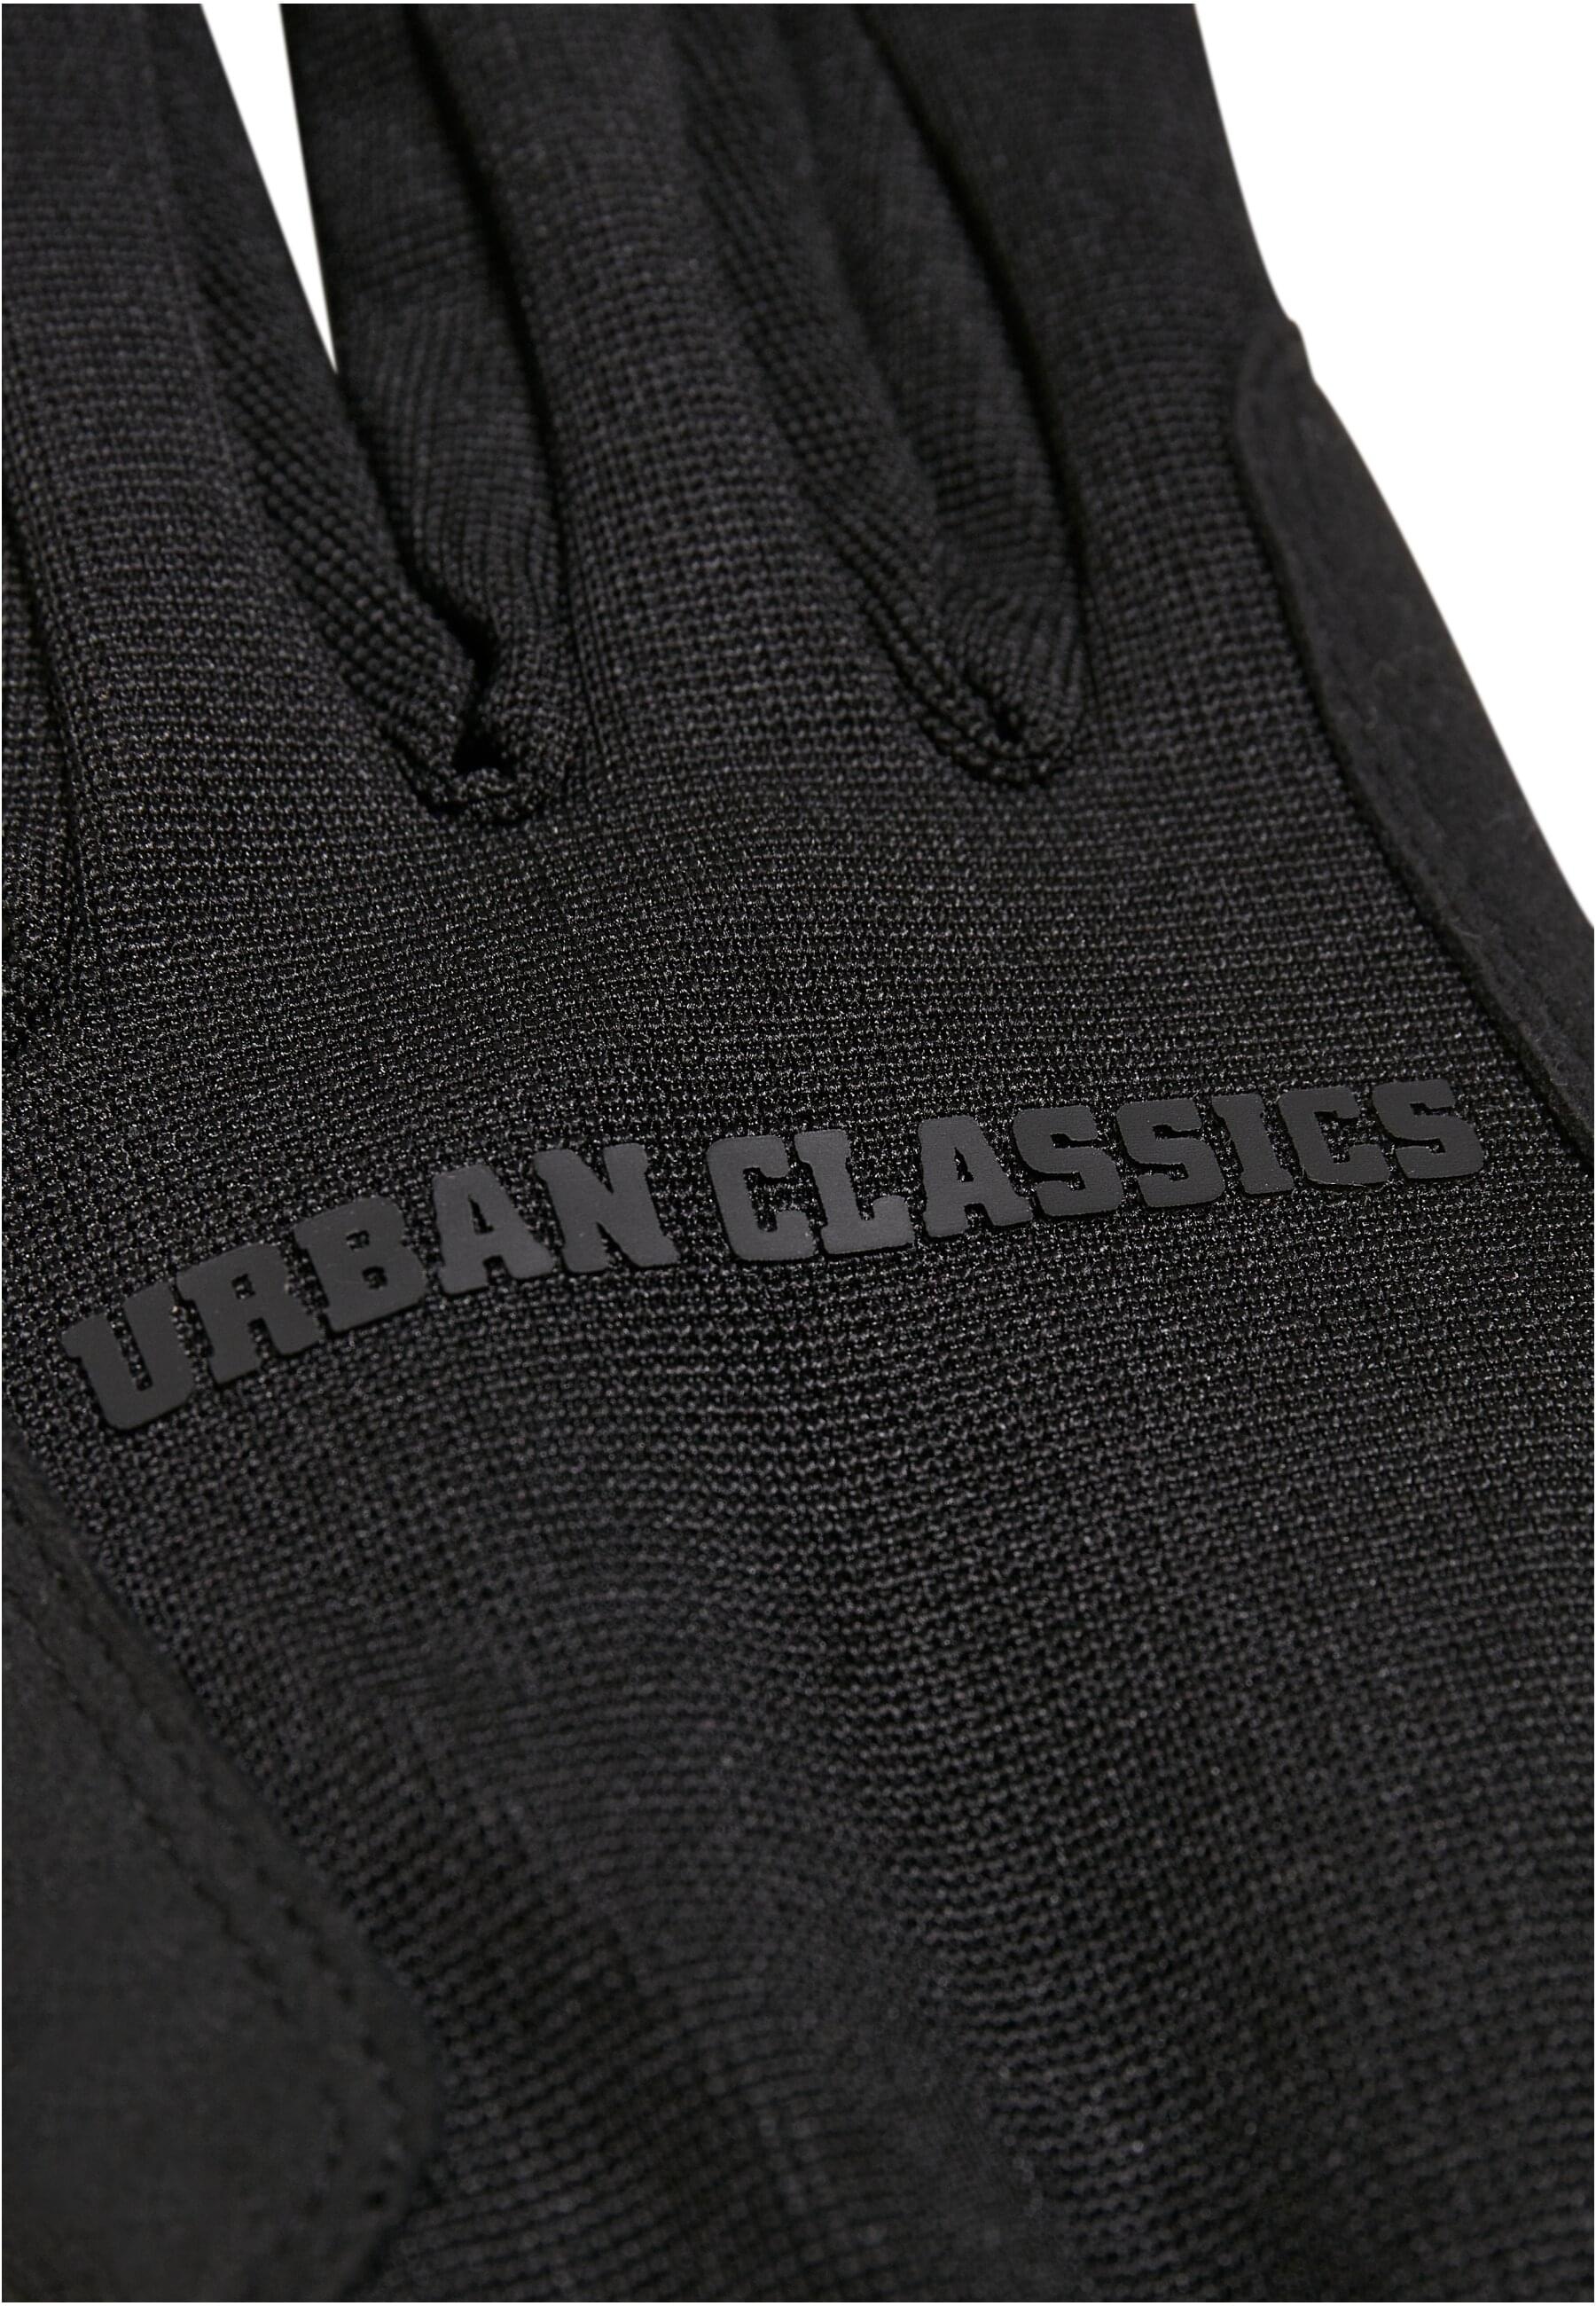 URBAN CLASSICS Baumwollhandschuhe »Urban Classics Unisex Performance Winter Gloves«